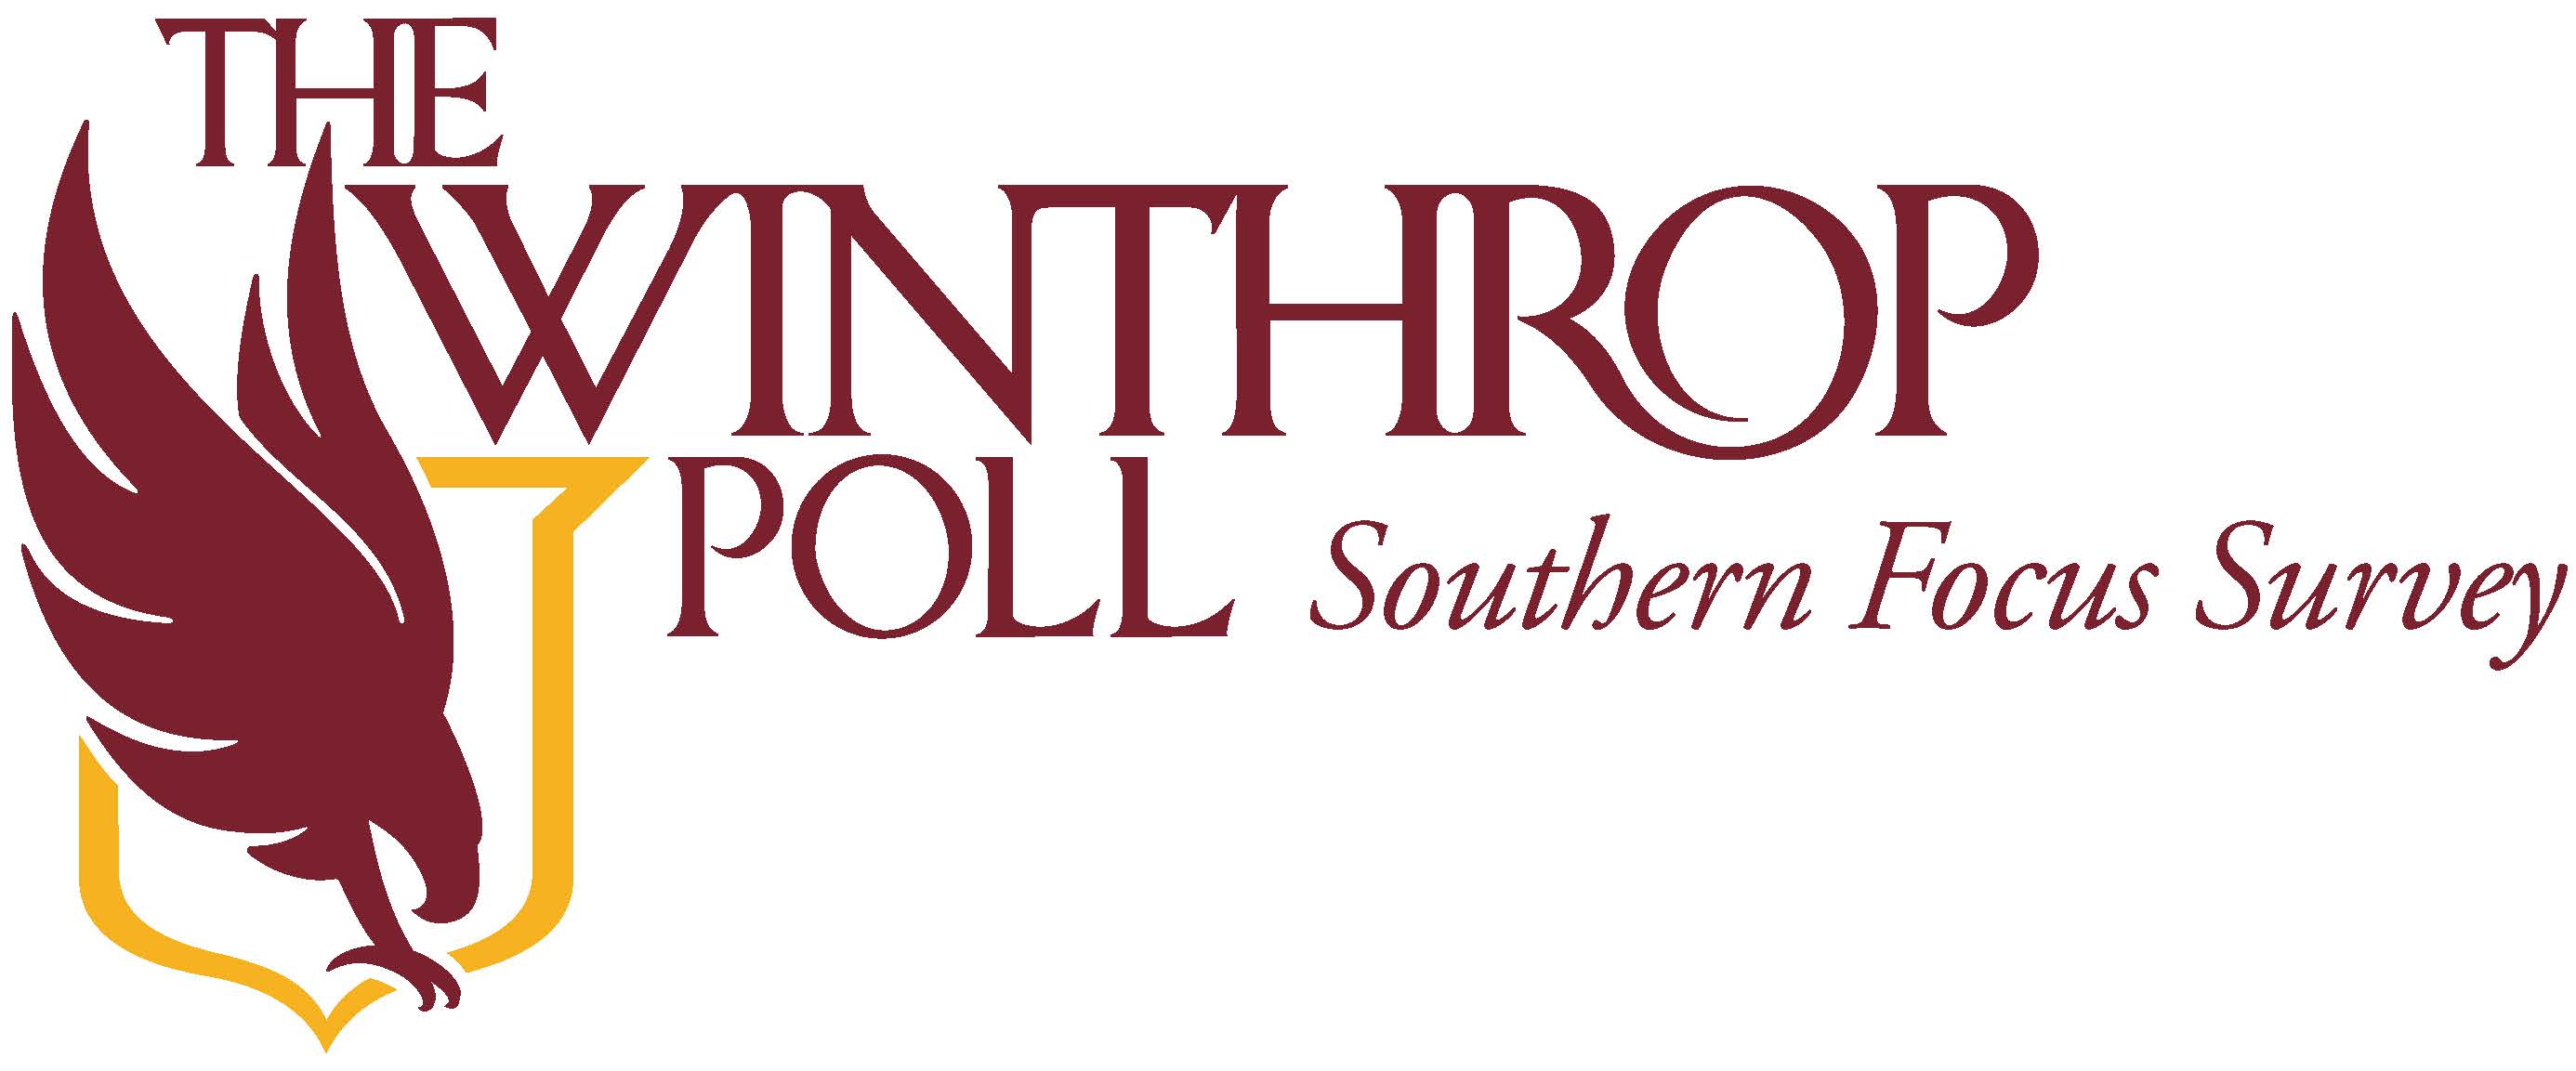 Winthrop Logo - Winthrop University: Winthrop Poll